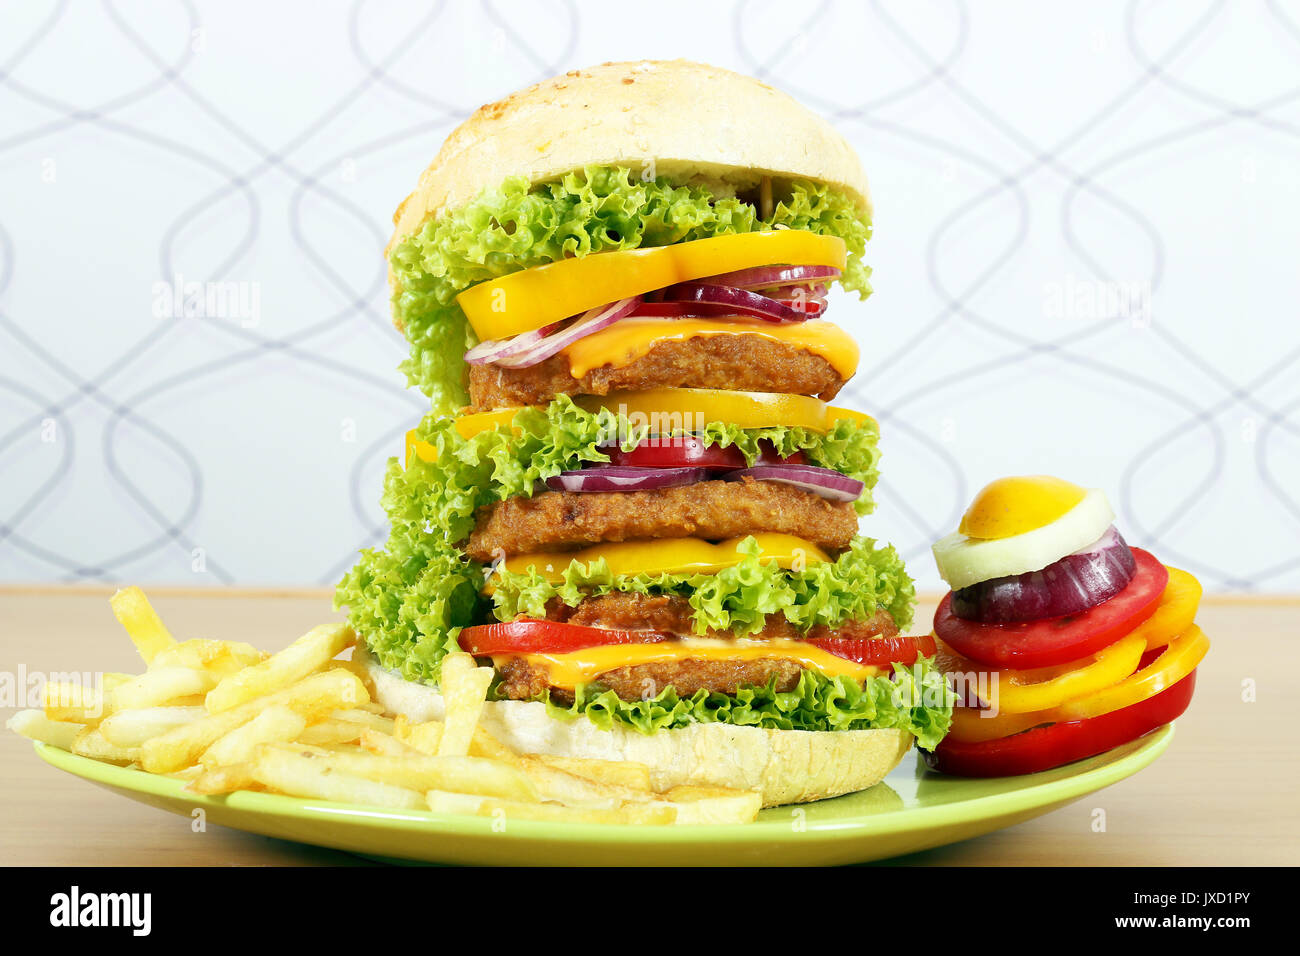 big hamburger with french fries and salad Stock Photo